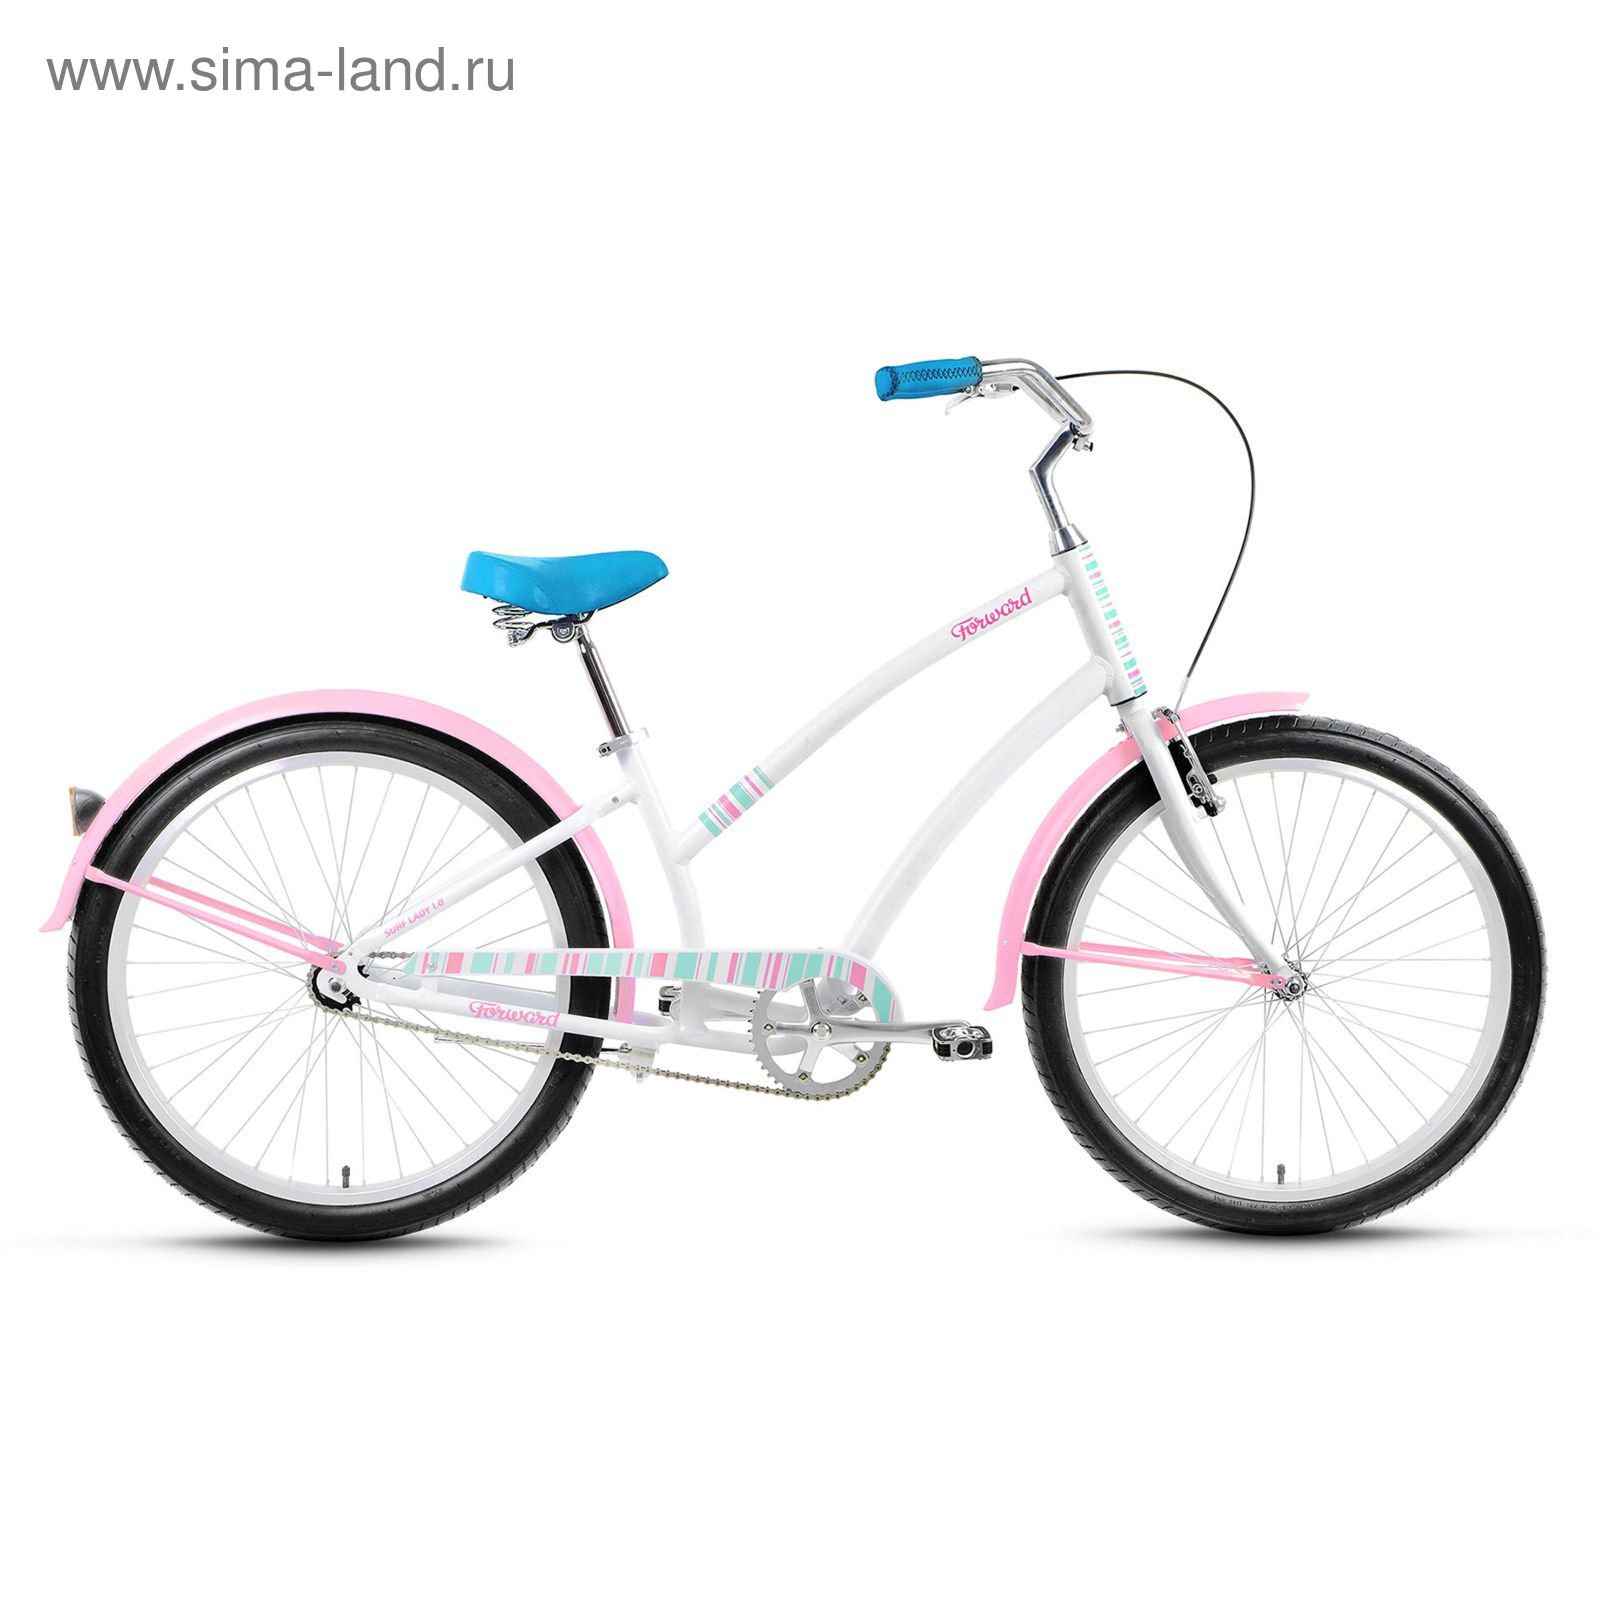 Велосипед 26" Forward Surf Lady 1.0, 2017, цвет белый матовый, размер 15"